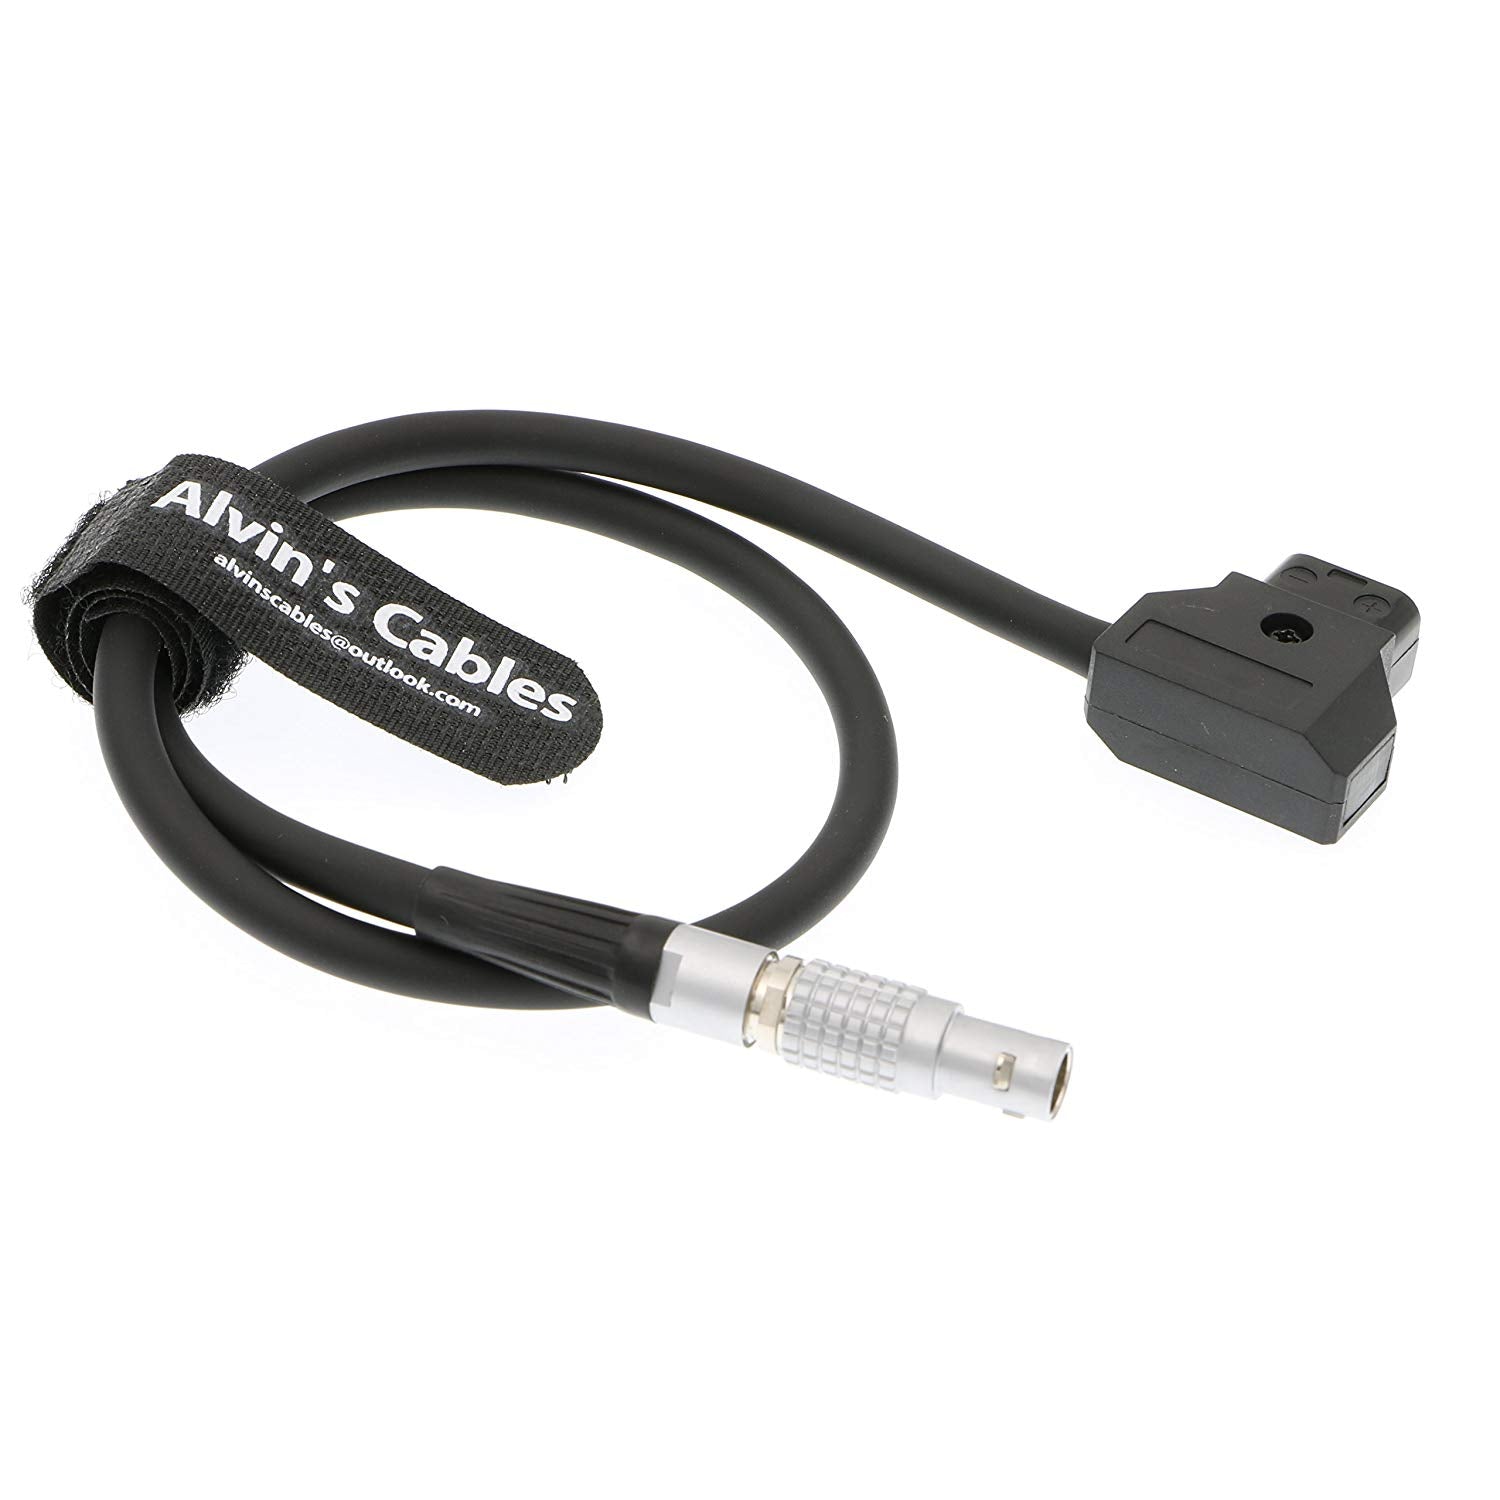 Alvin's Cables 2-poliger Stecker auf D TAP-Stromkabel für Bartech Focus Device Receiver Artemis Letus Redrock Hedén Steadicam